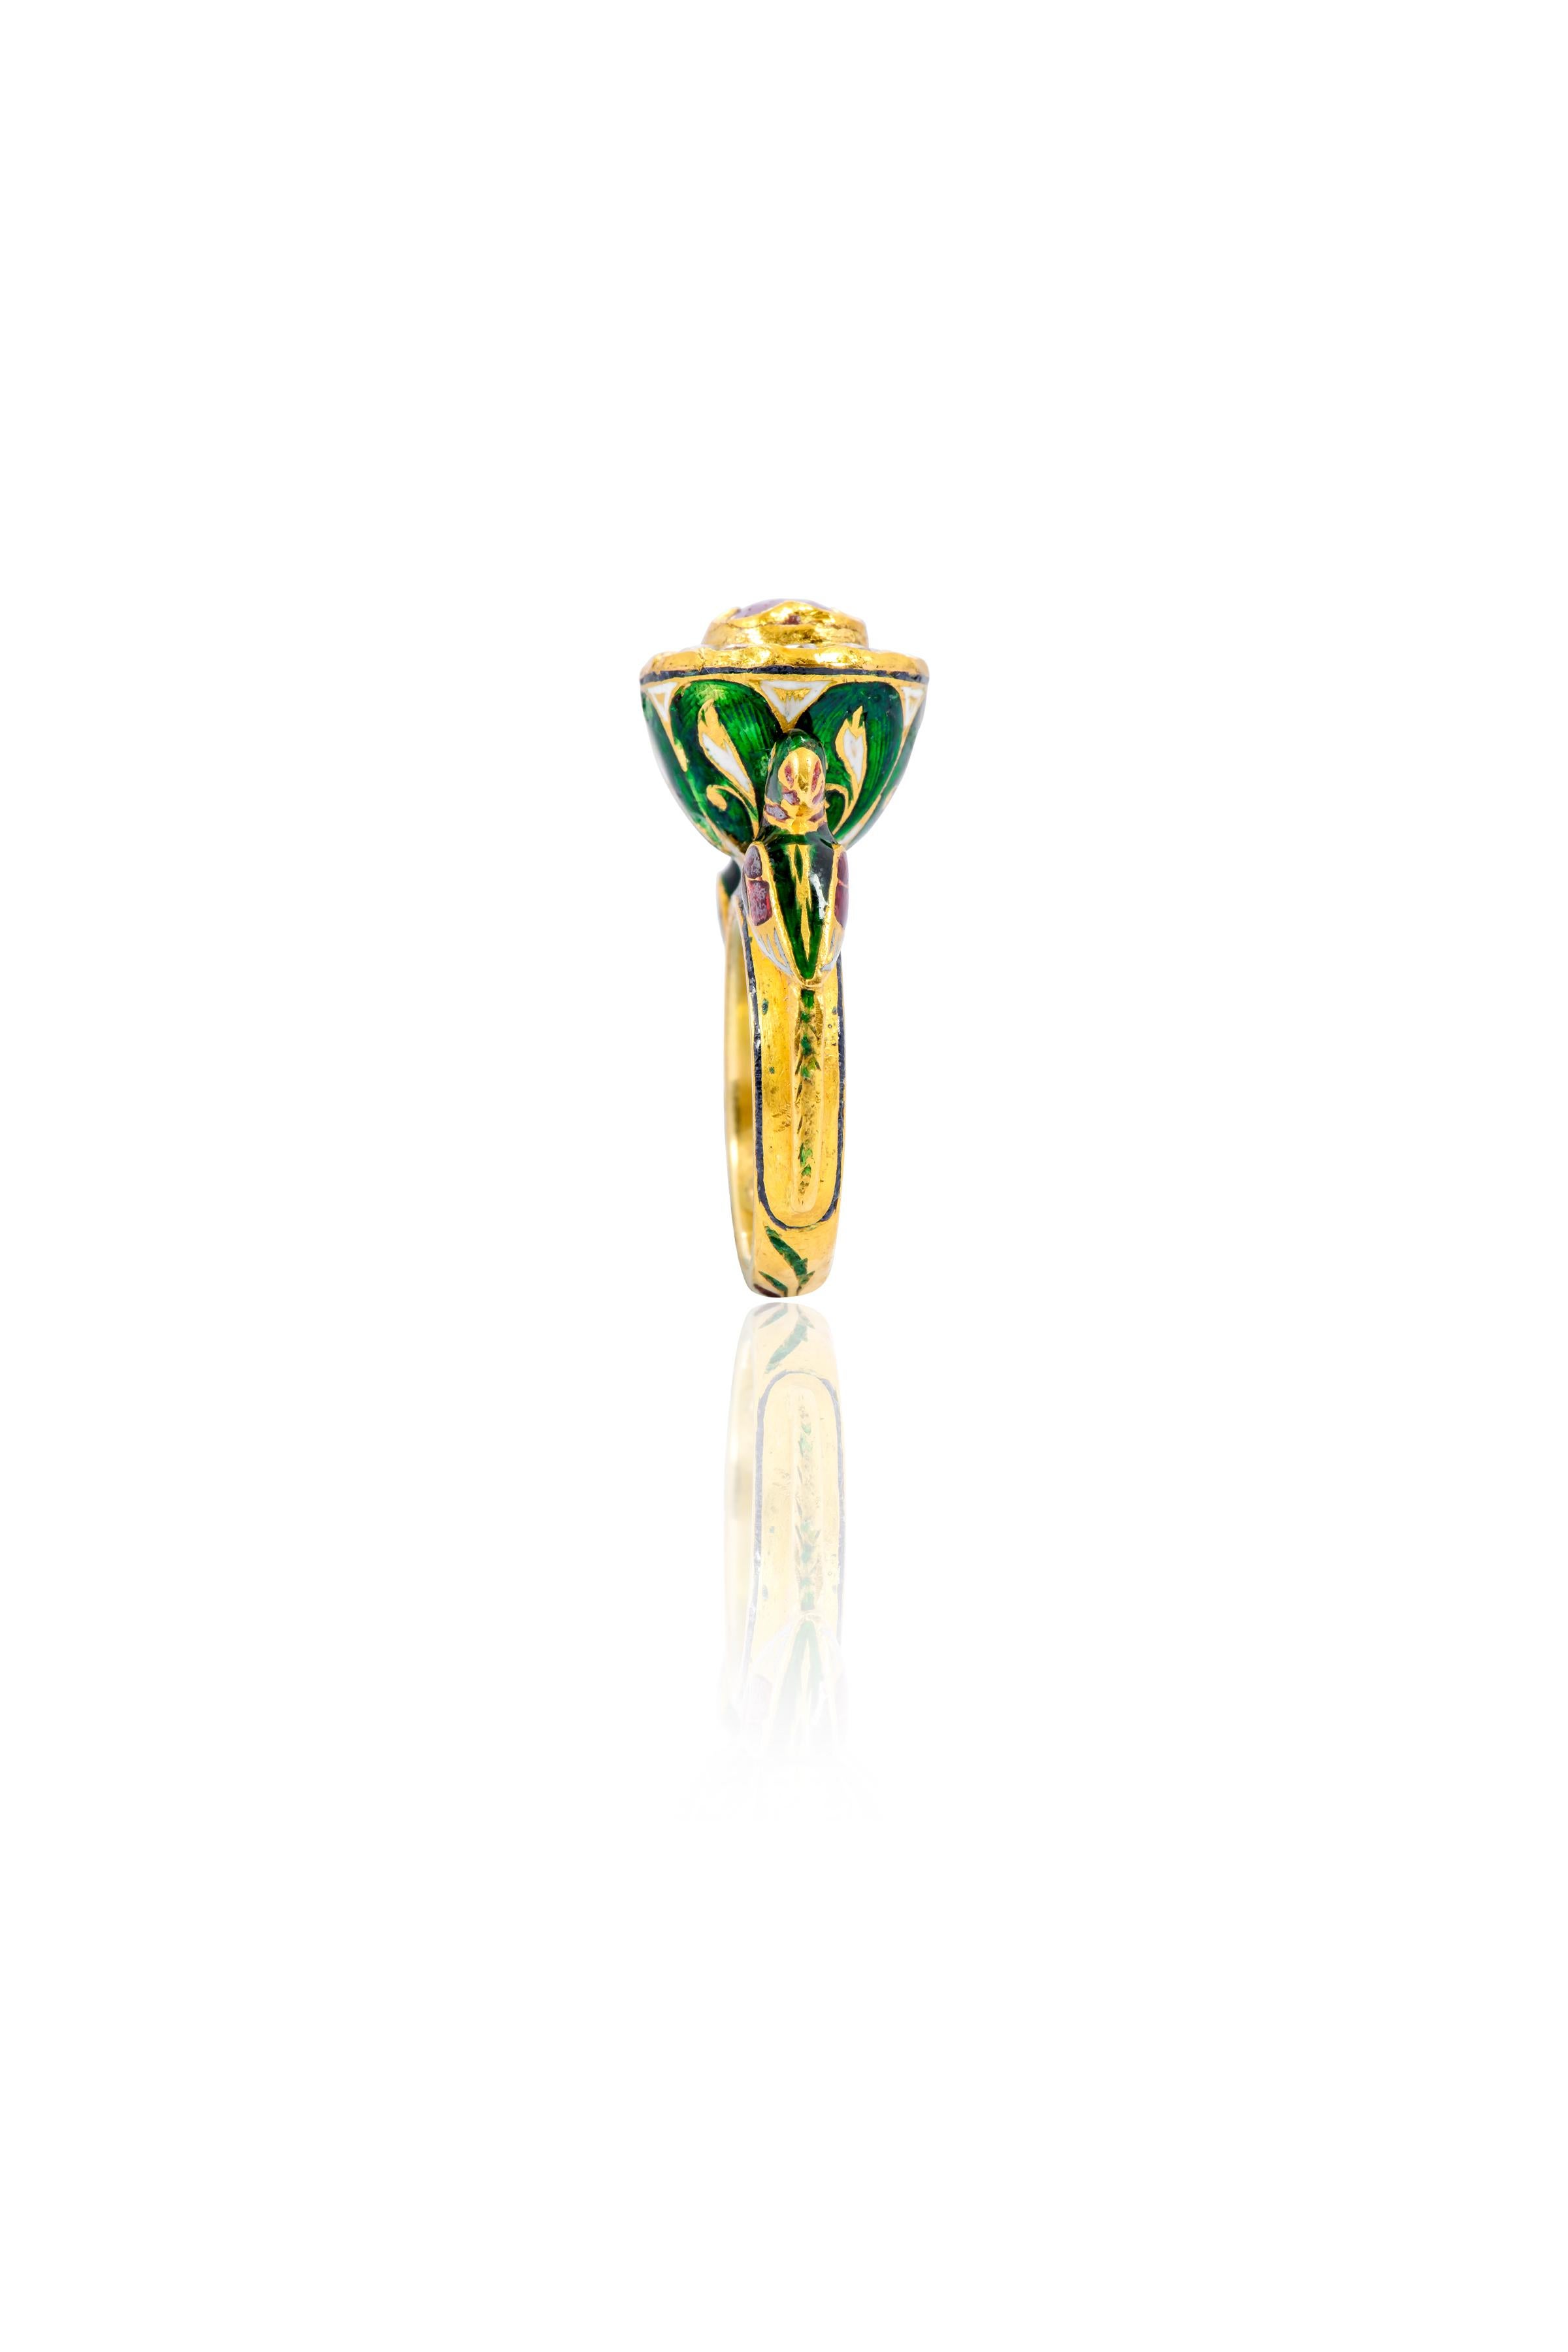 Rose Cut 22 Karat Yellow Gold Ruby and Diamond Statement Bird Ring Handcrafted